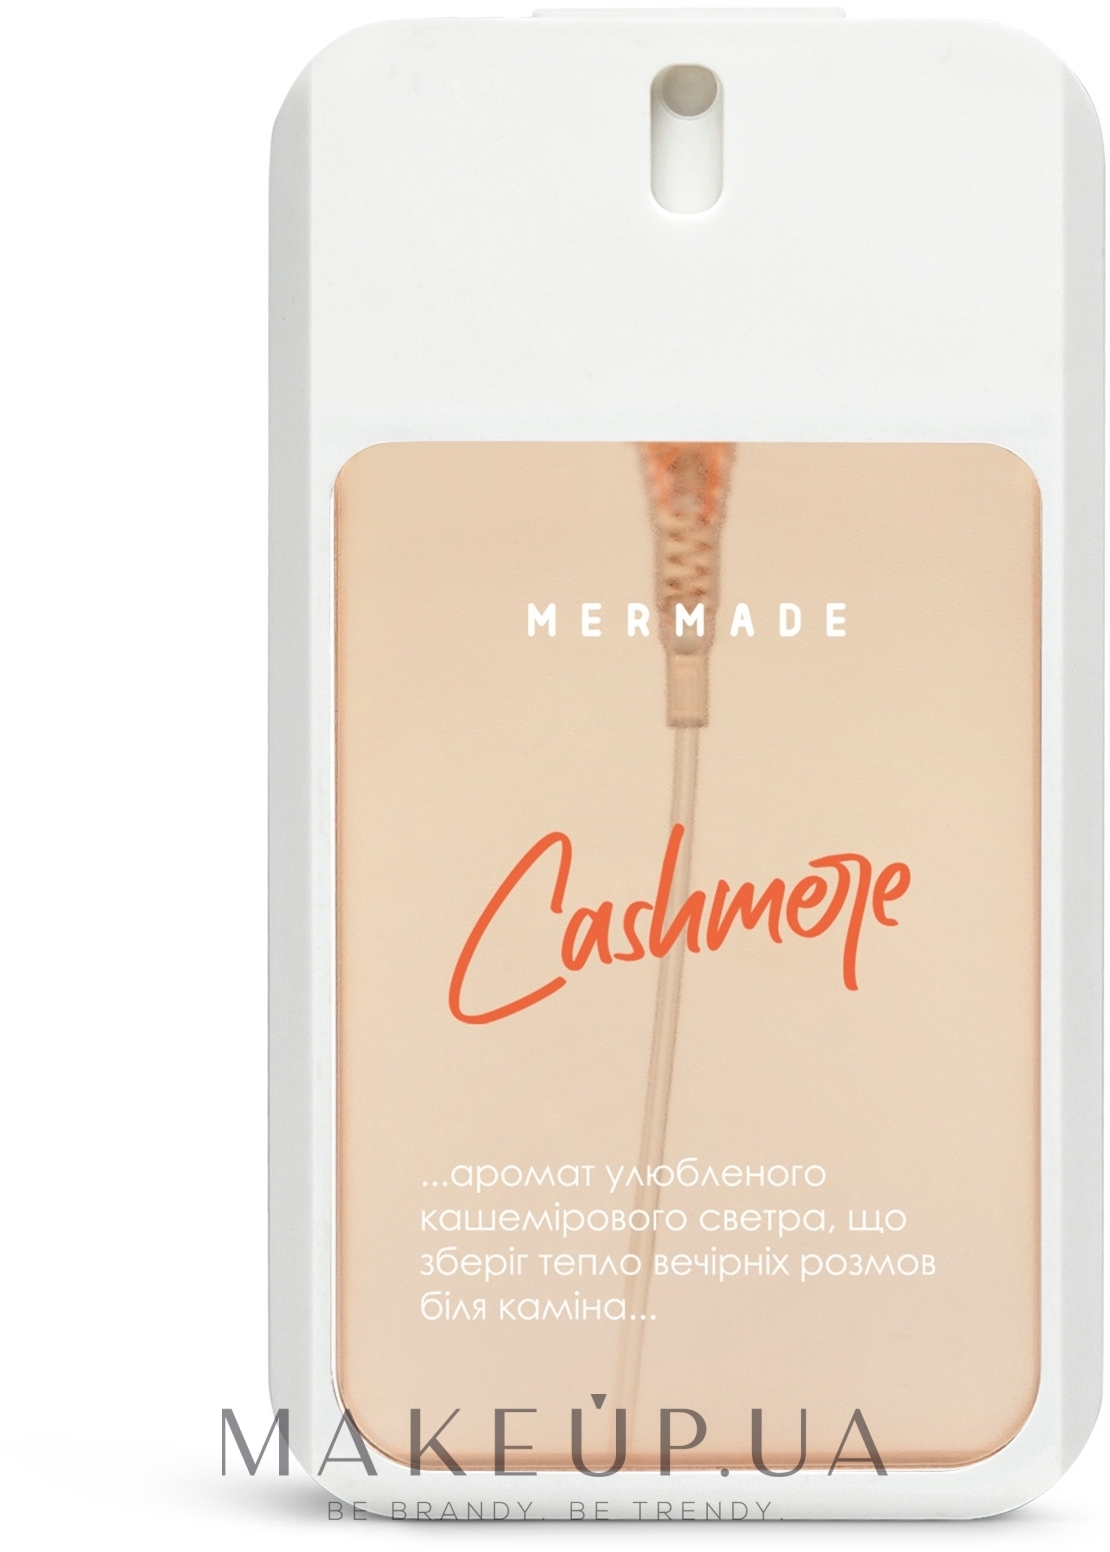 Mermade Cashmere - Парфюмированная вода — фото 50ml